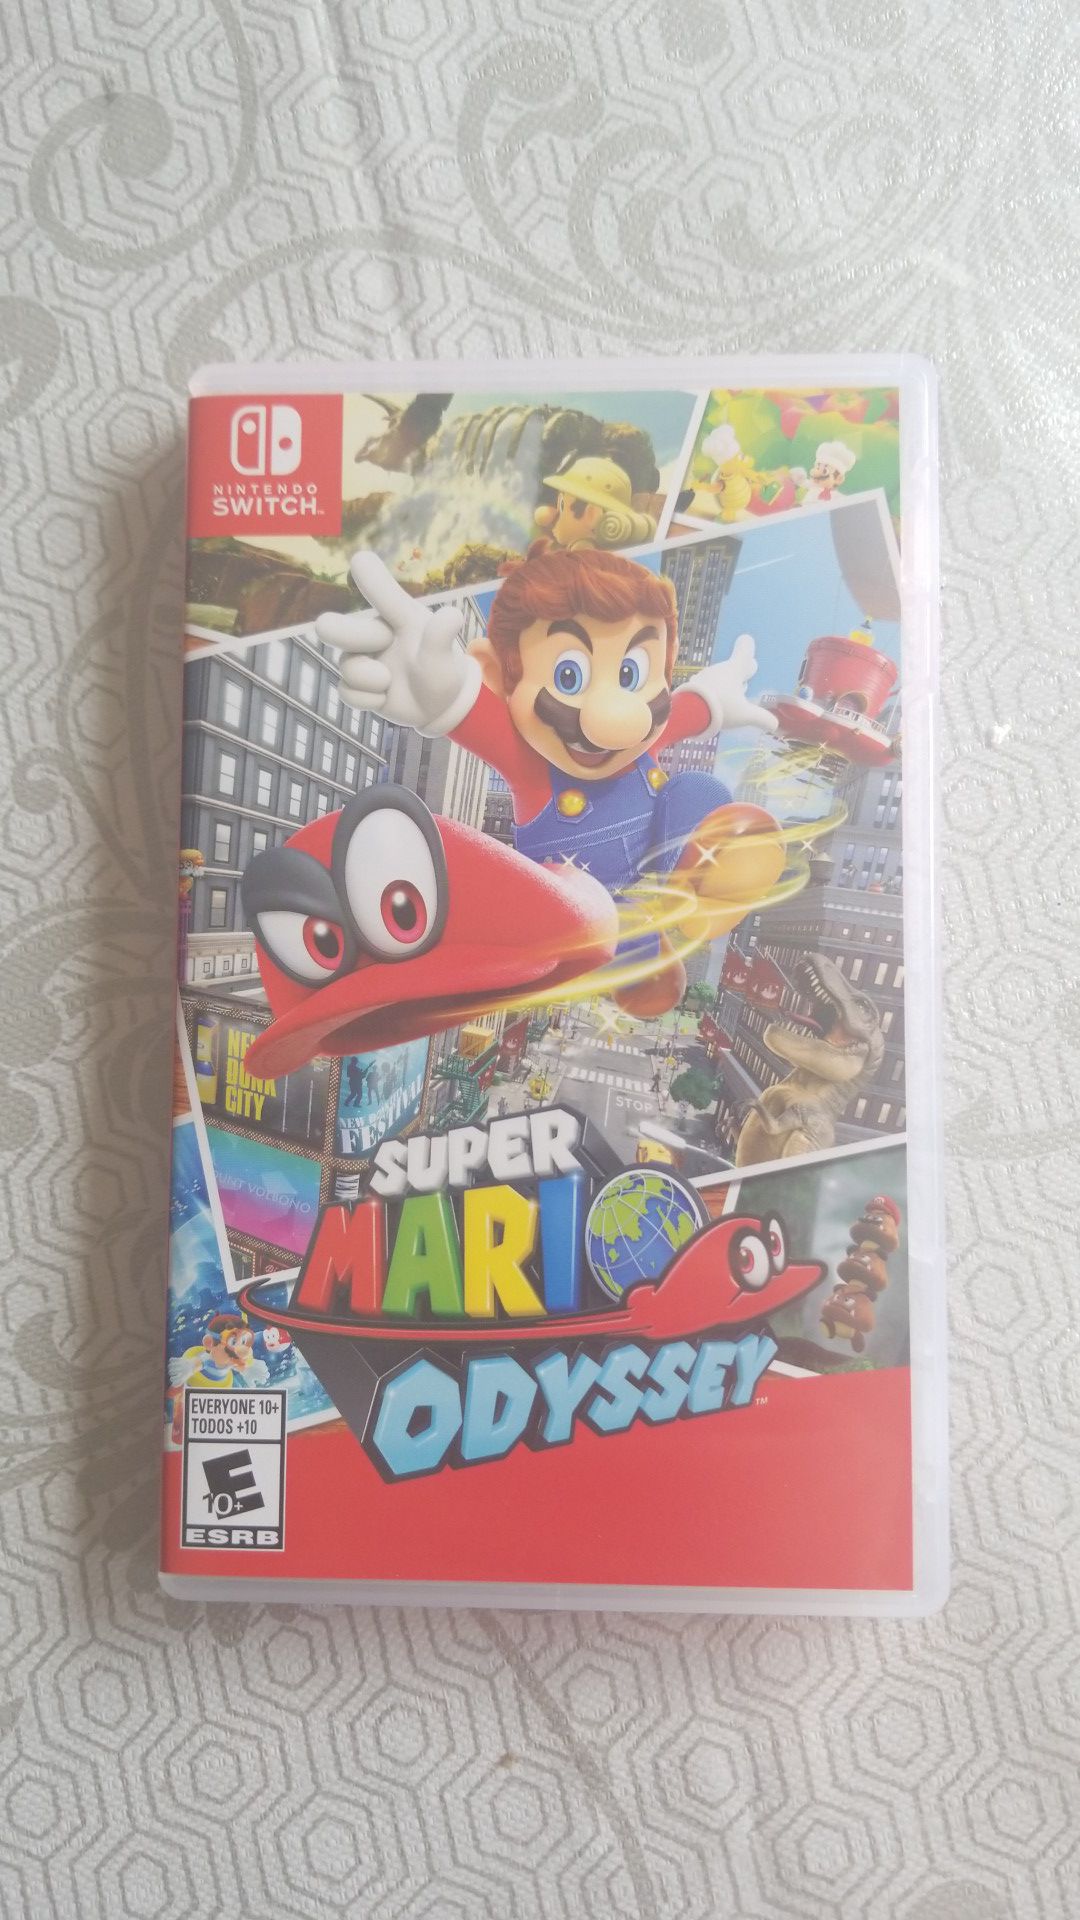 Super mario odyssey ( Nintendo switch)